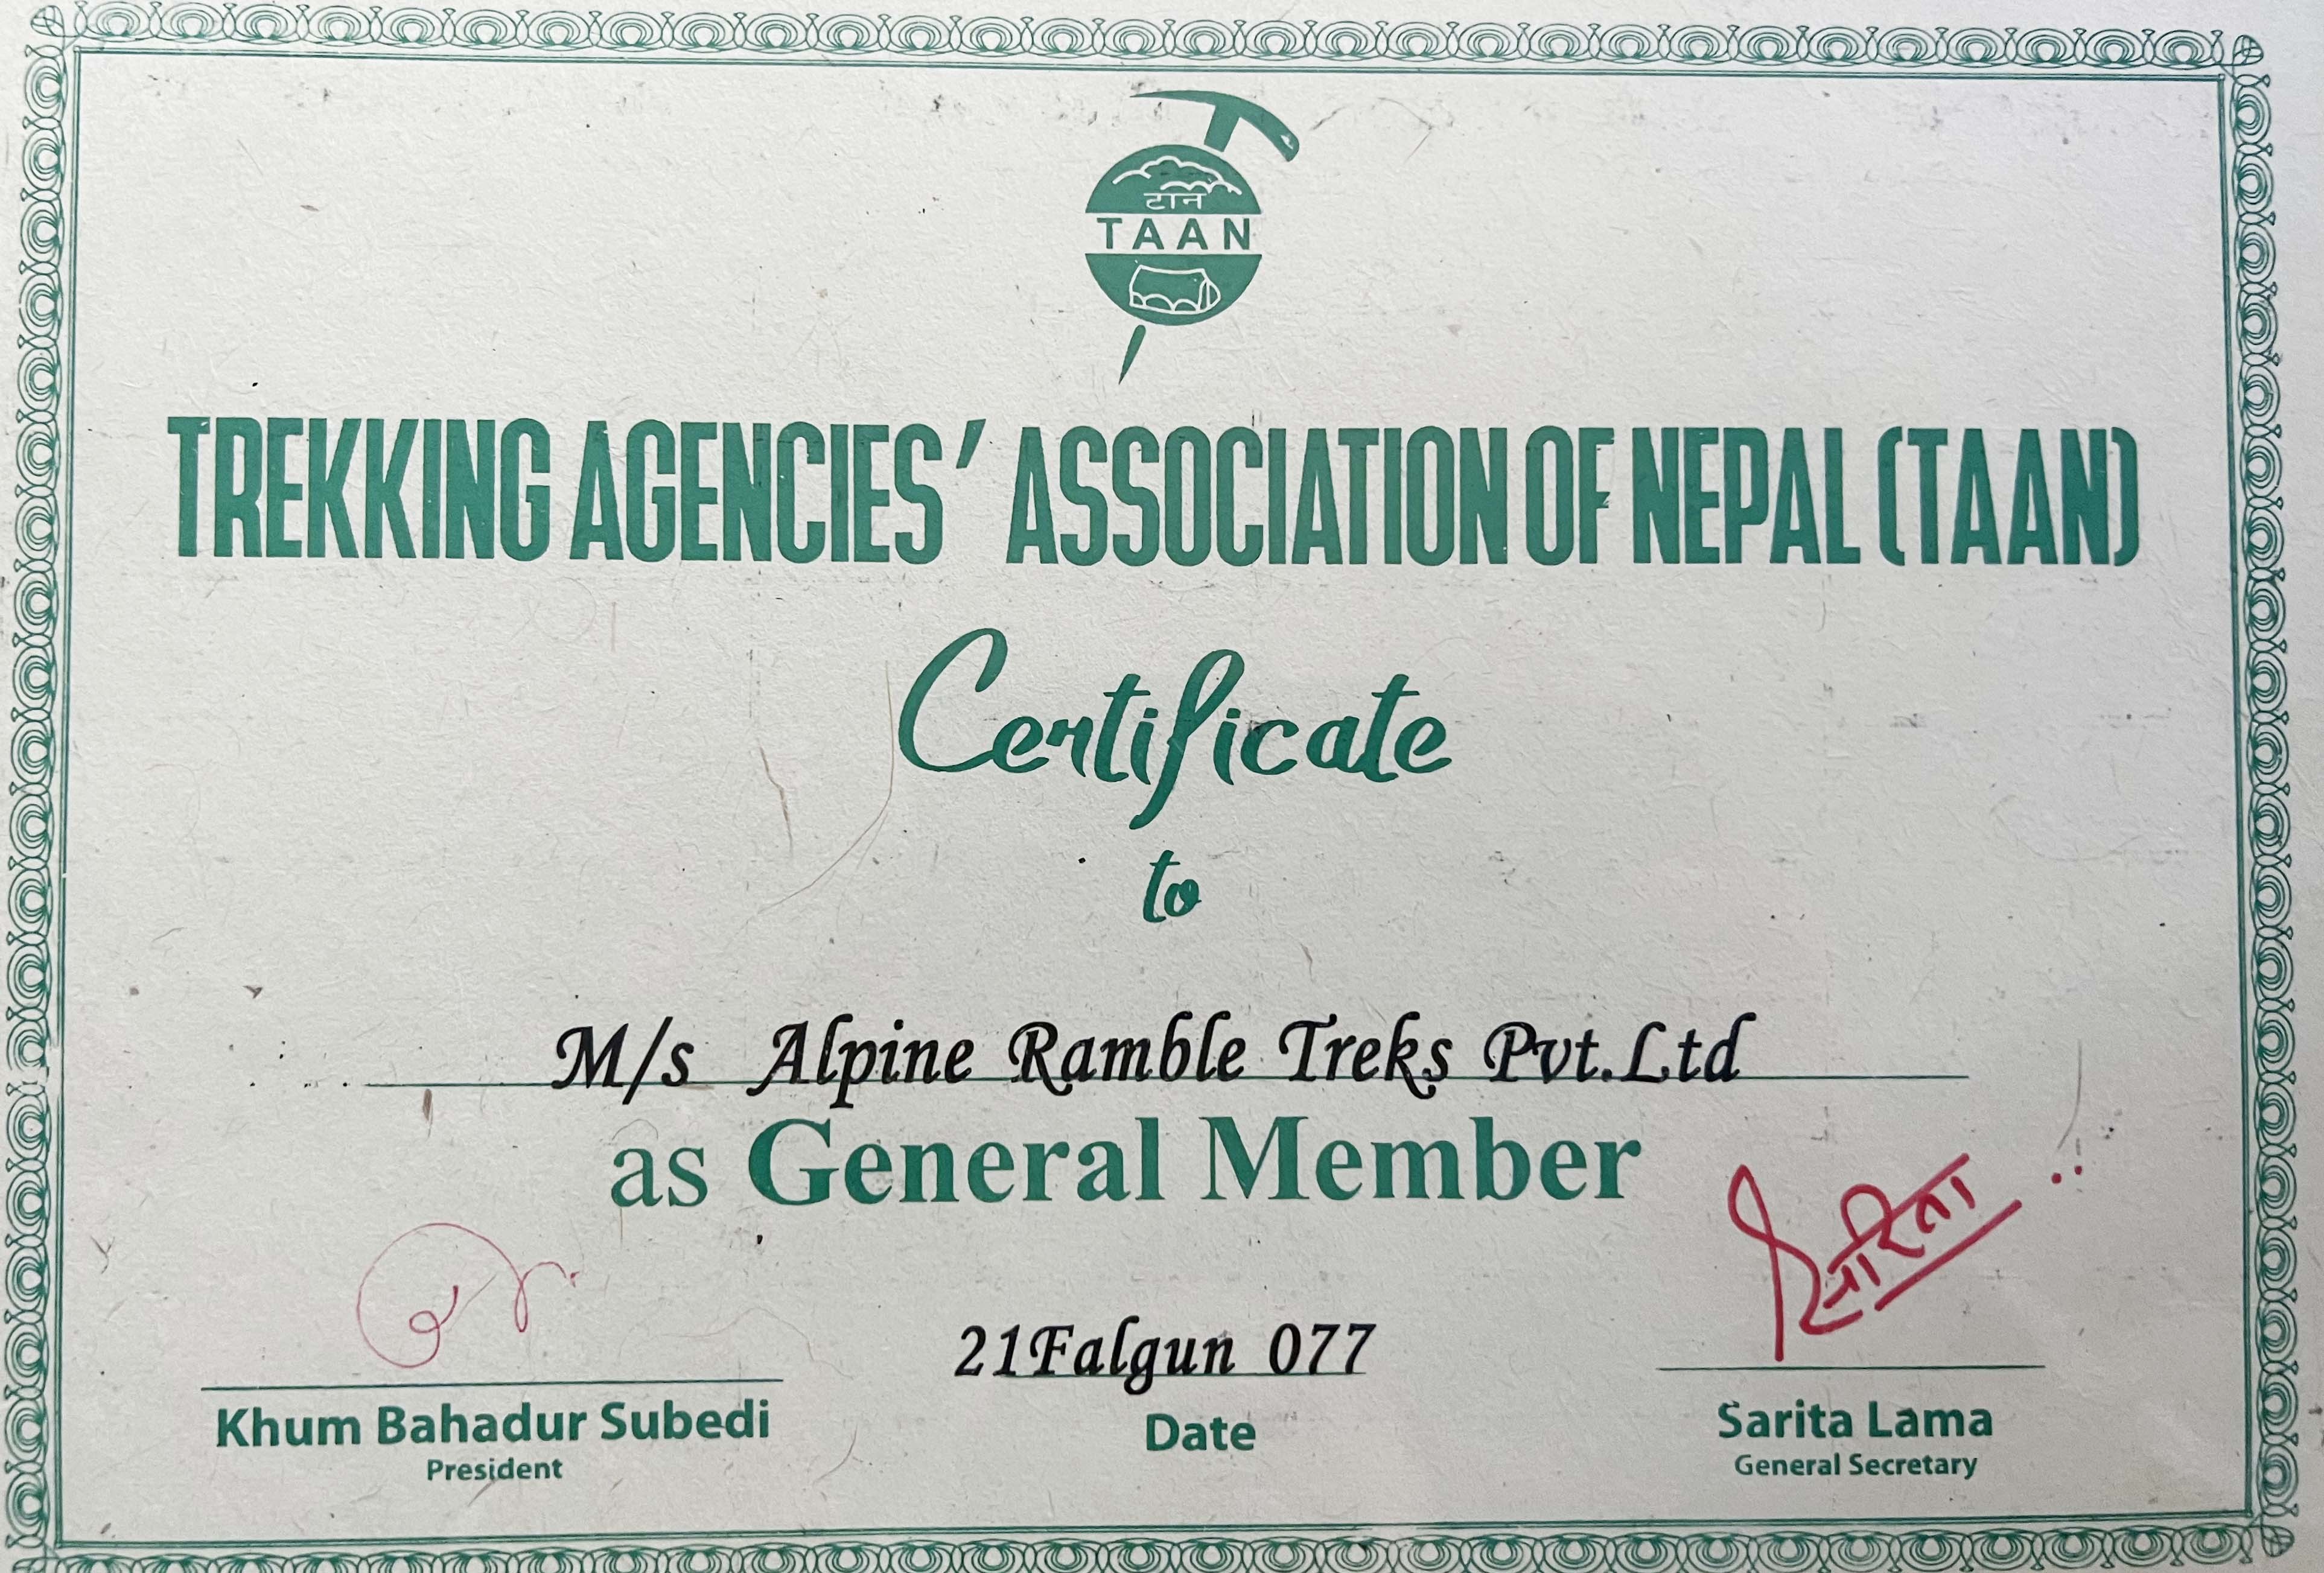 Trekking agencies association of Nepal (TAAN) membership Certificate